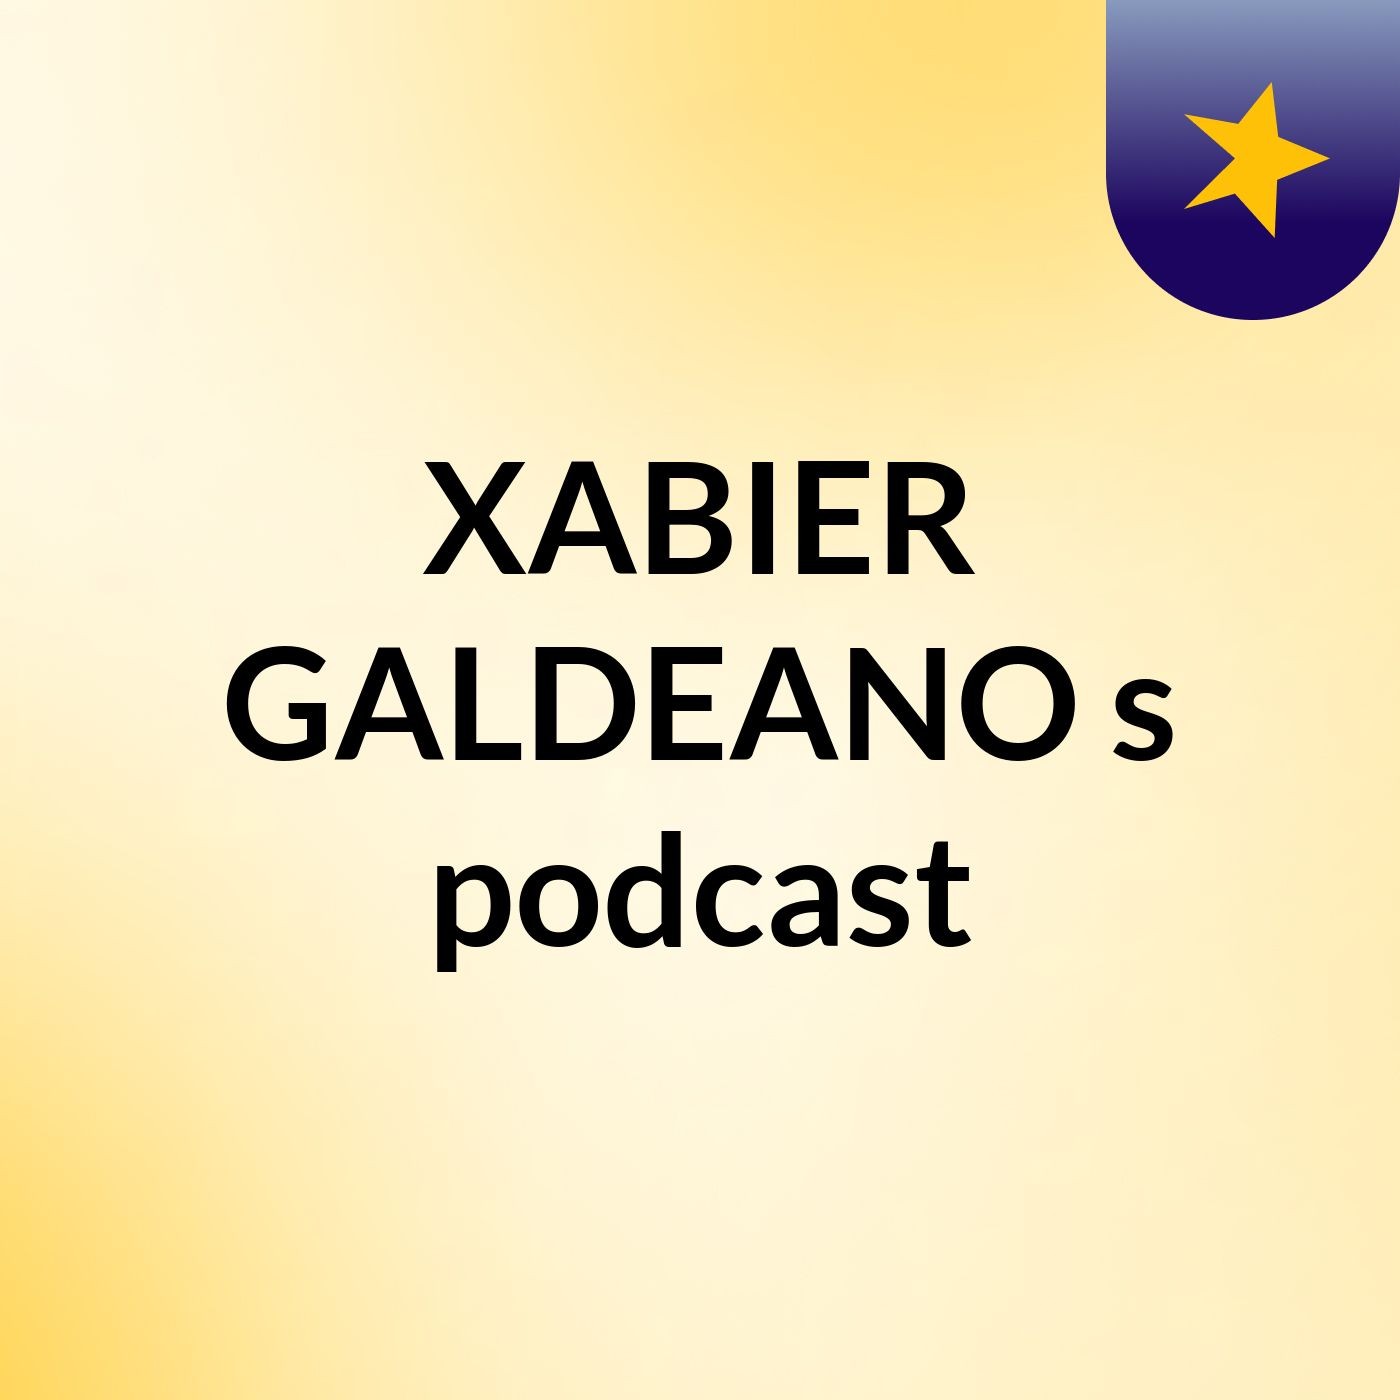 XABIER GALDEANO's podcast